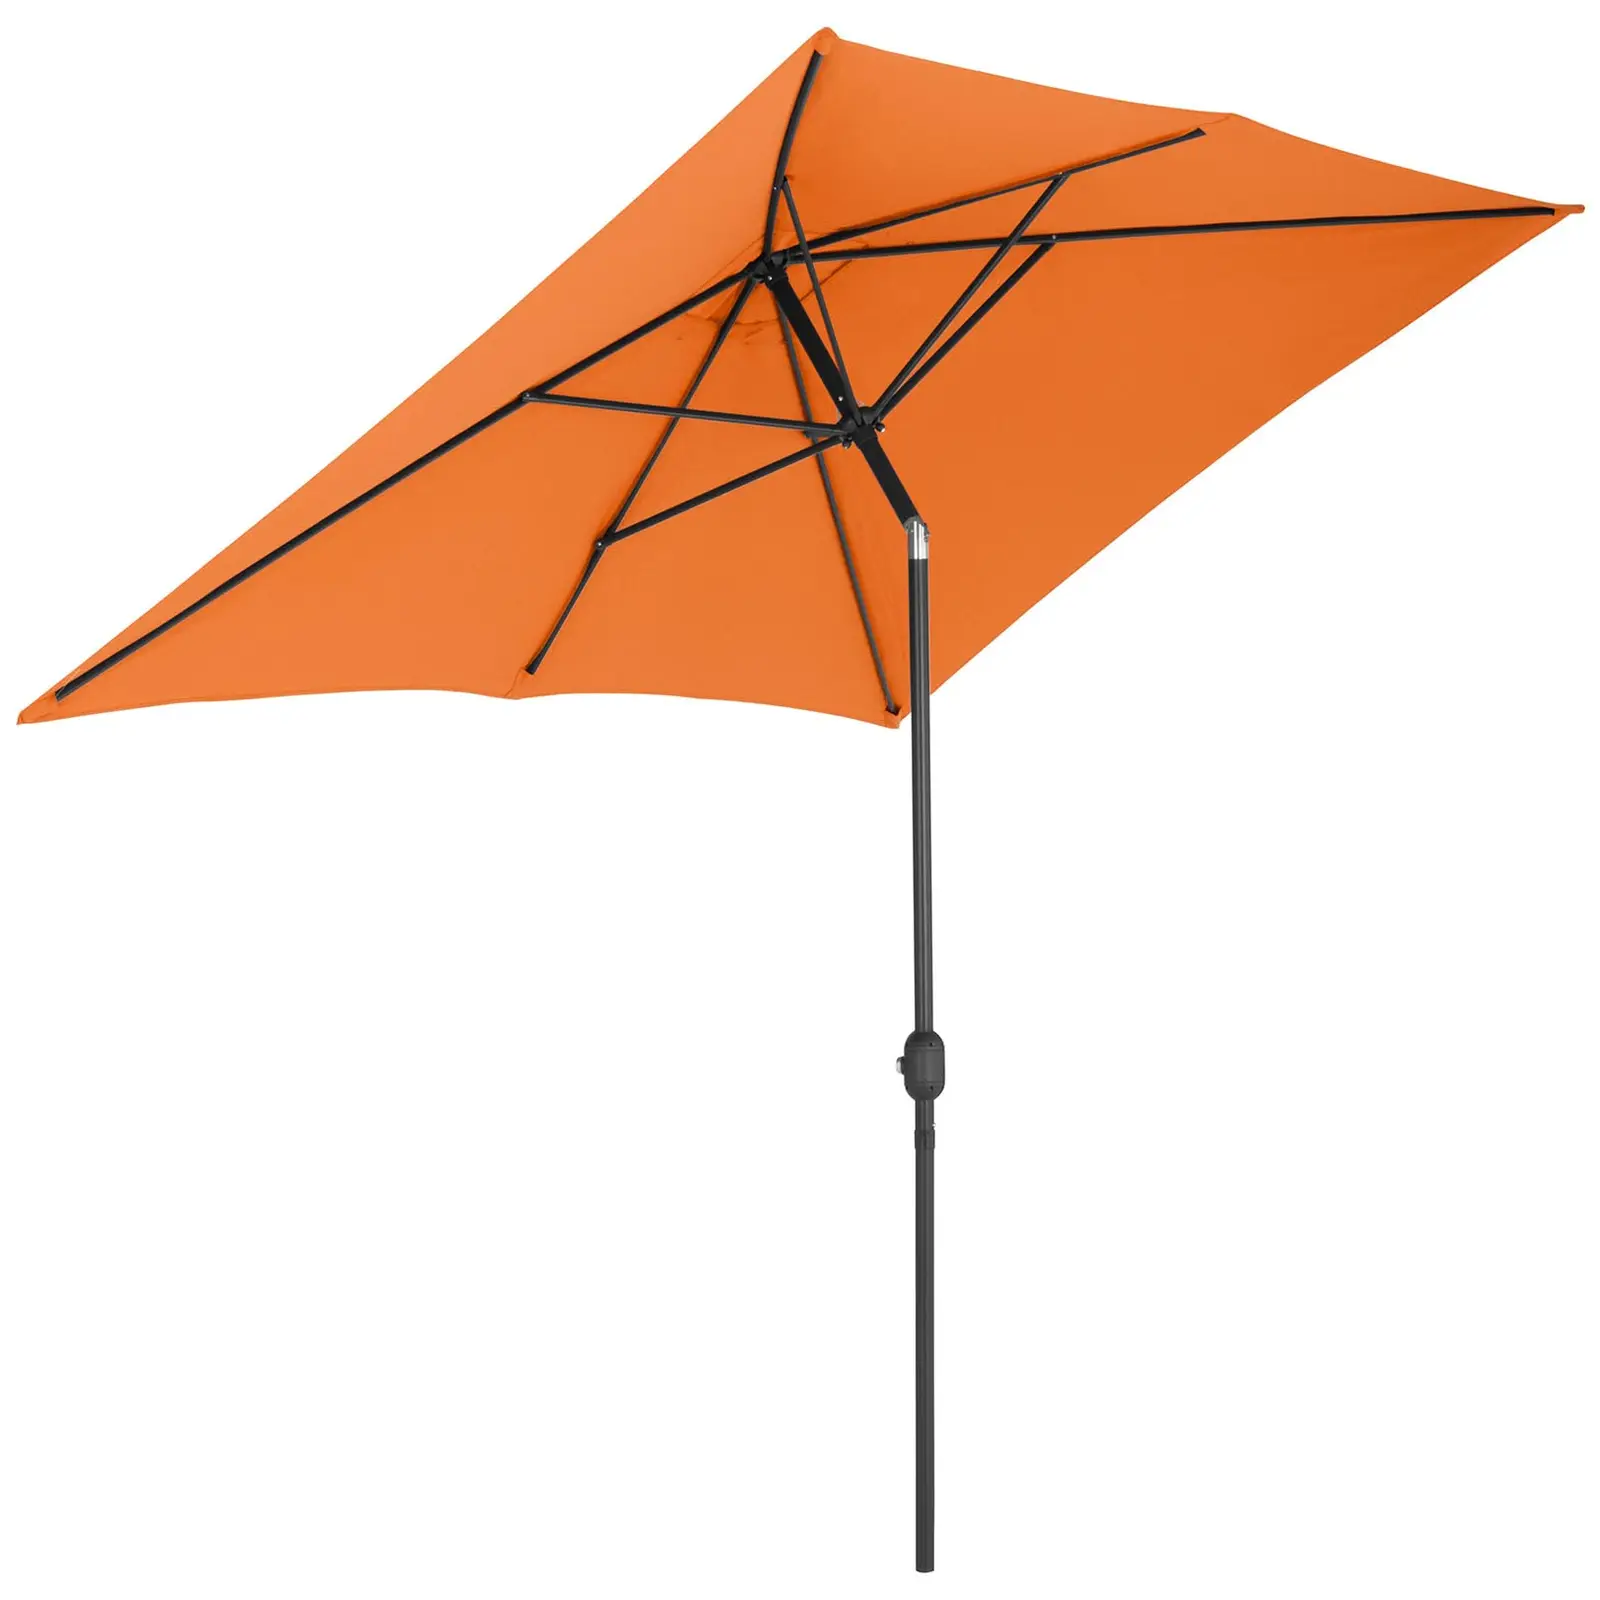 Occasion Grand parasol - Orange - Rectangulaire - 200 x 300 cm - Inclinable